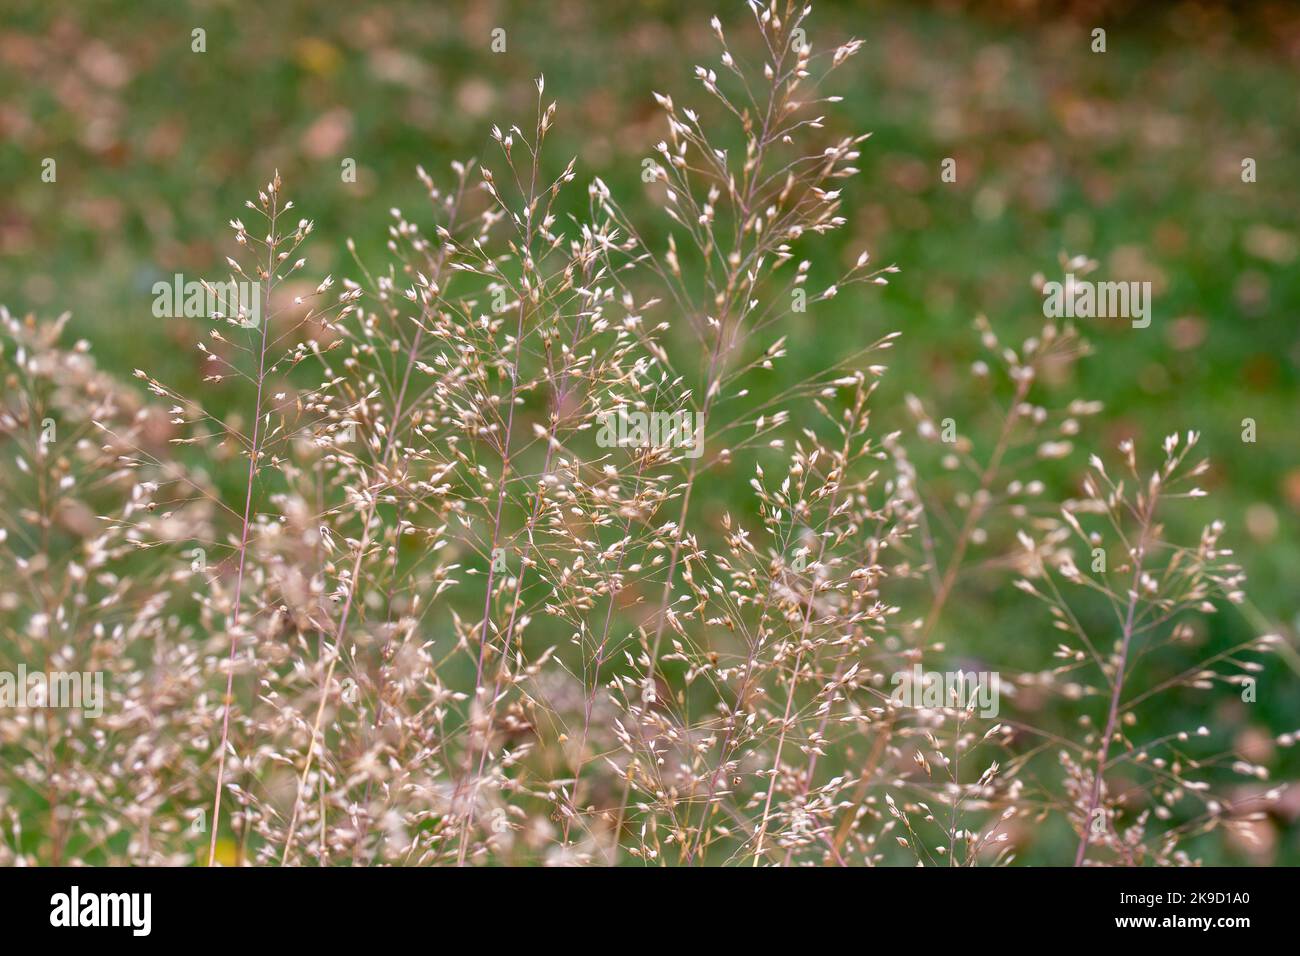 This image shows a macro view of airy tufted hairgrass (deschampsia cespitosa) in a sunny autumn garden Stock Photo